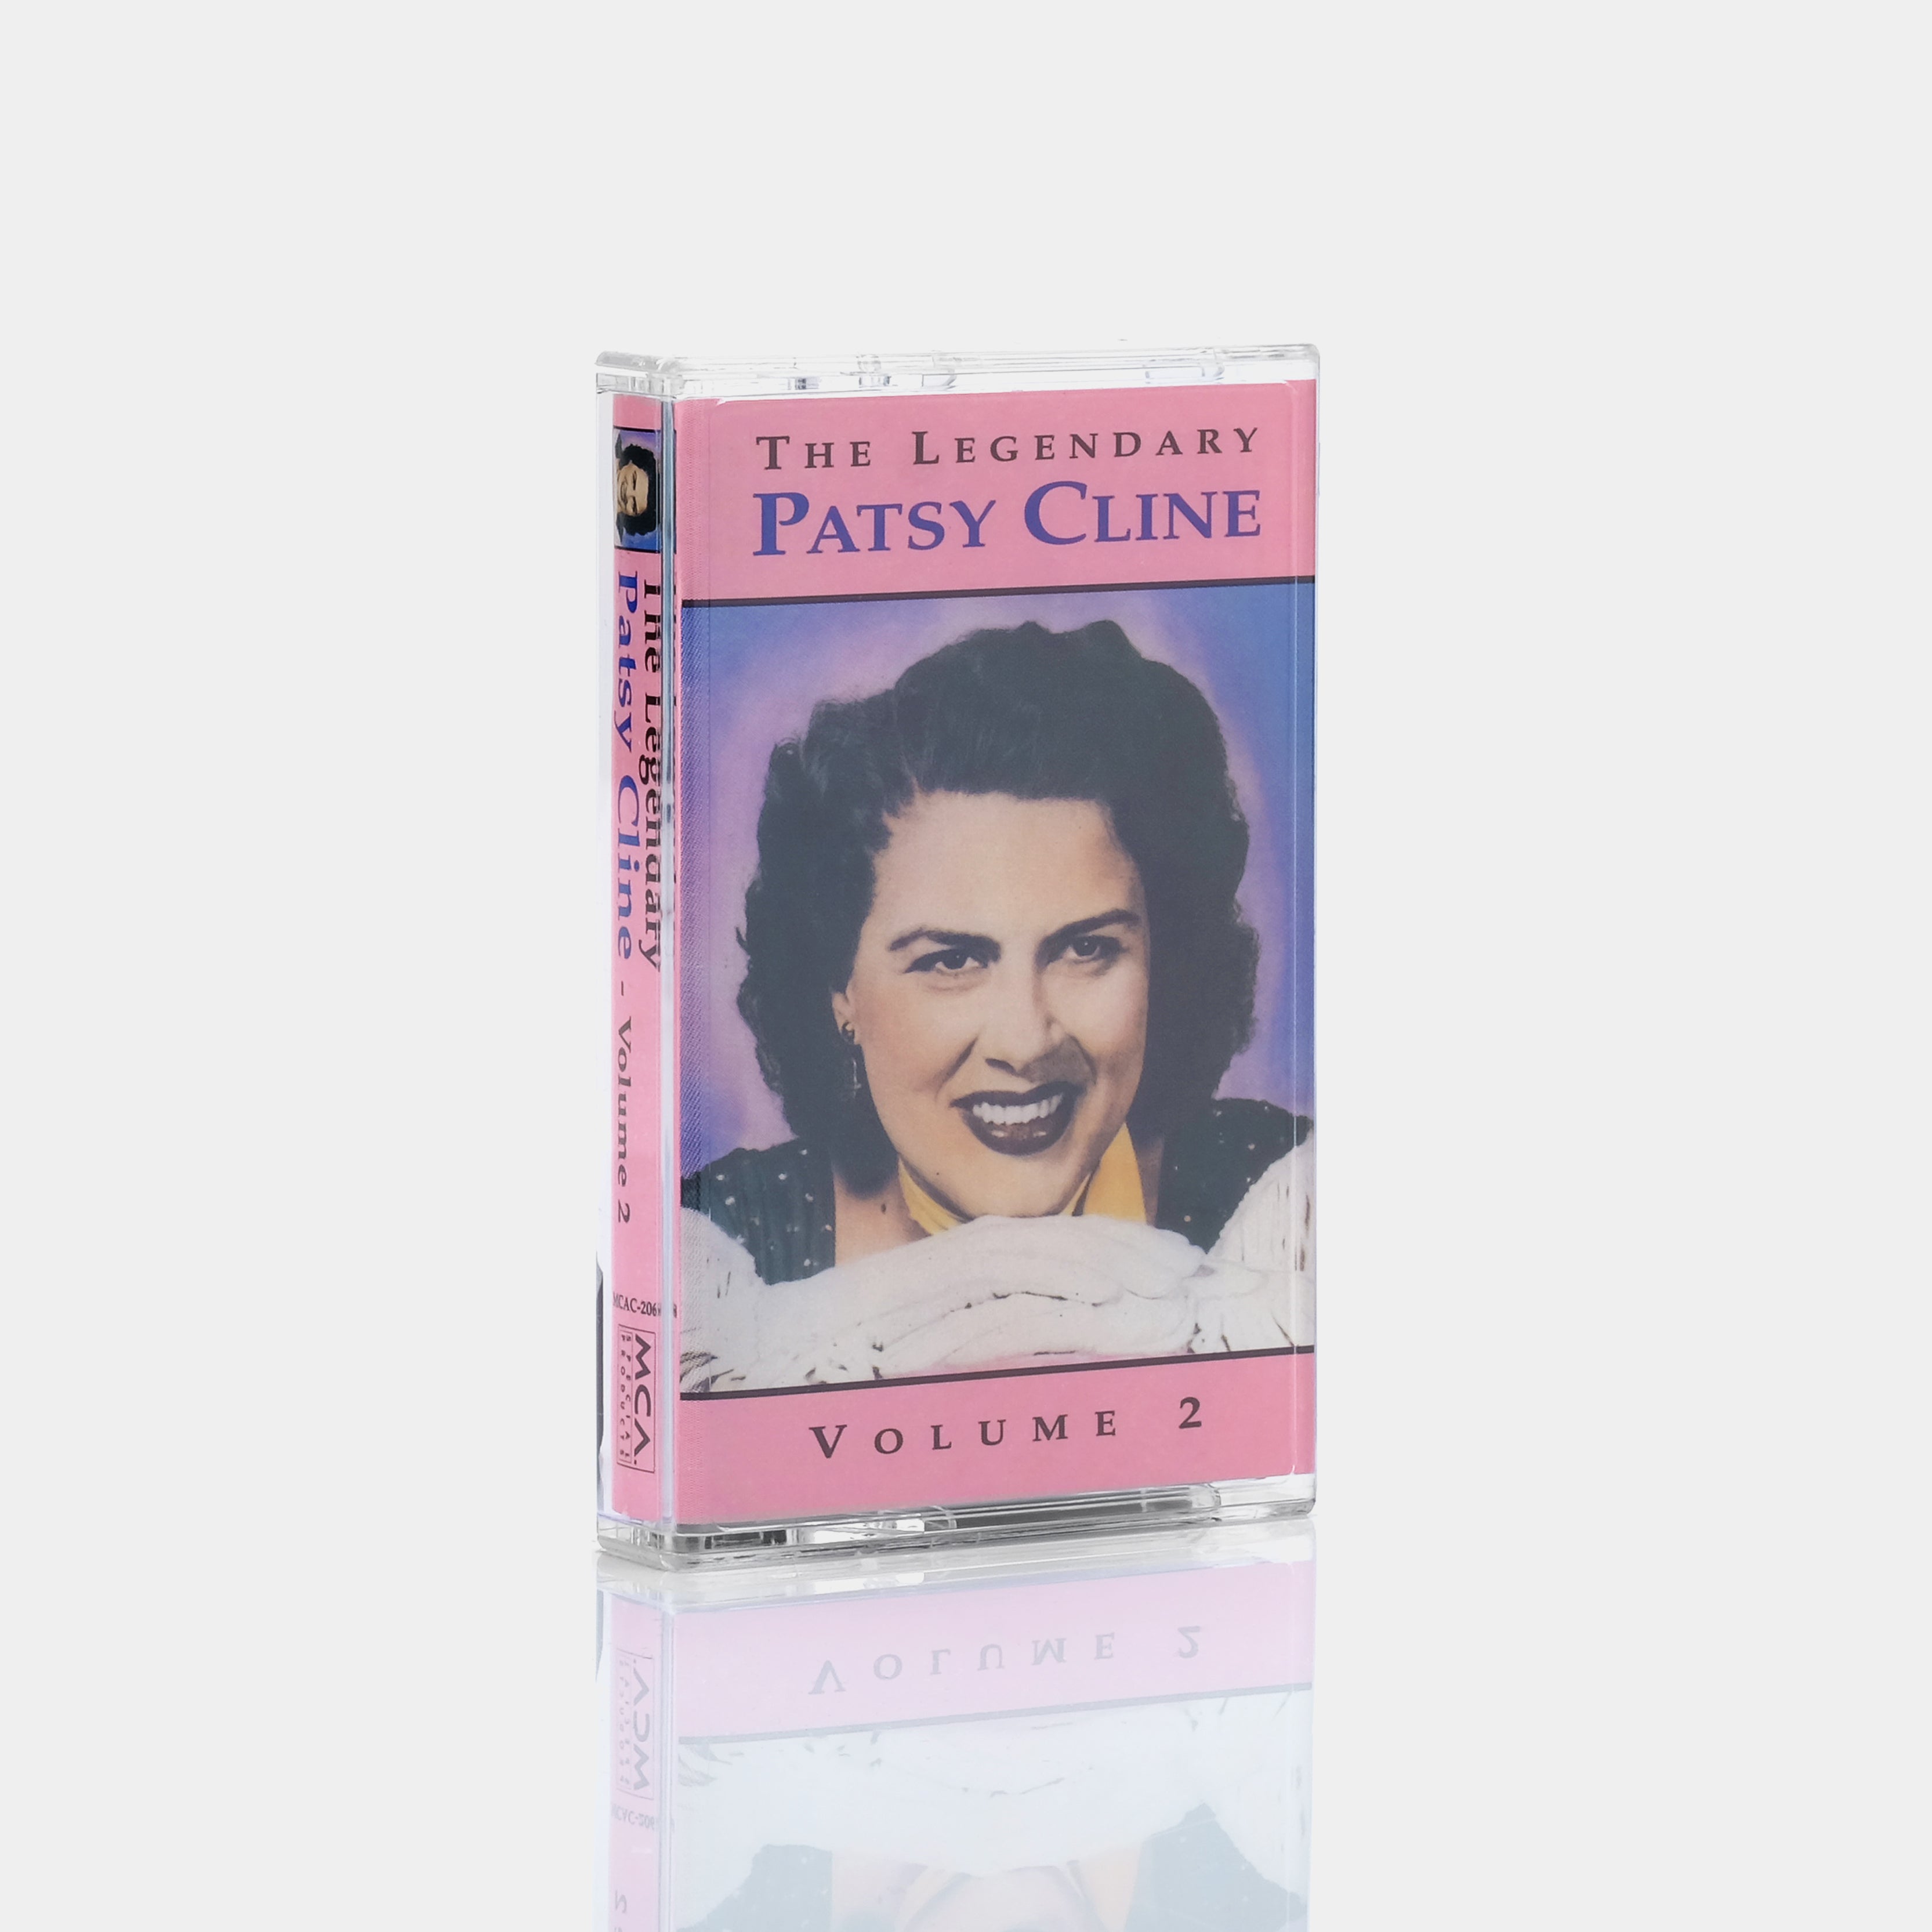 Patsy Cline - The Legendary Patsy Cline (Volume 2) Cassette Tape